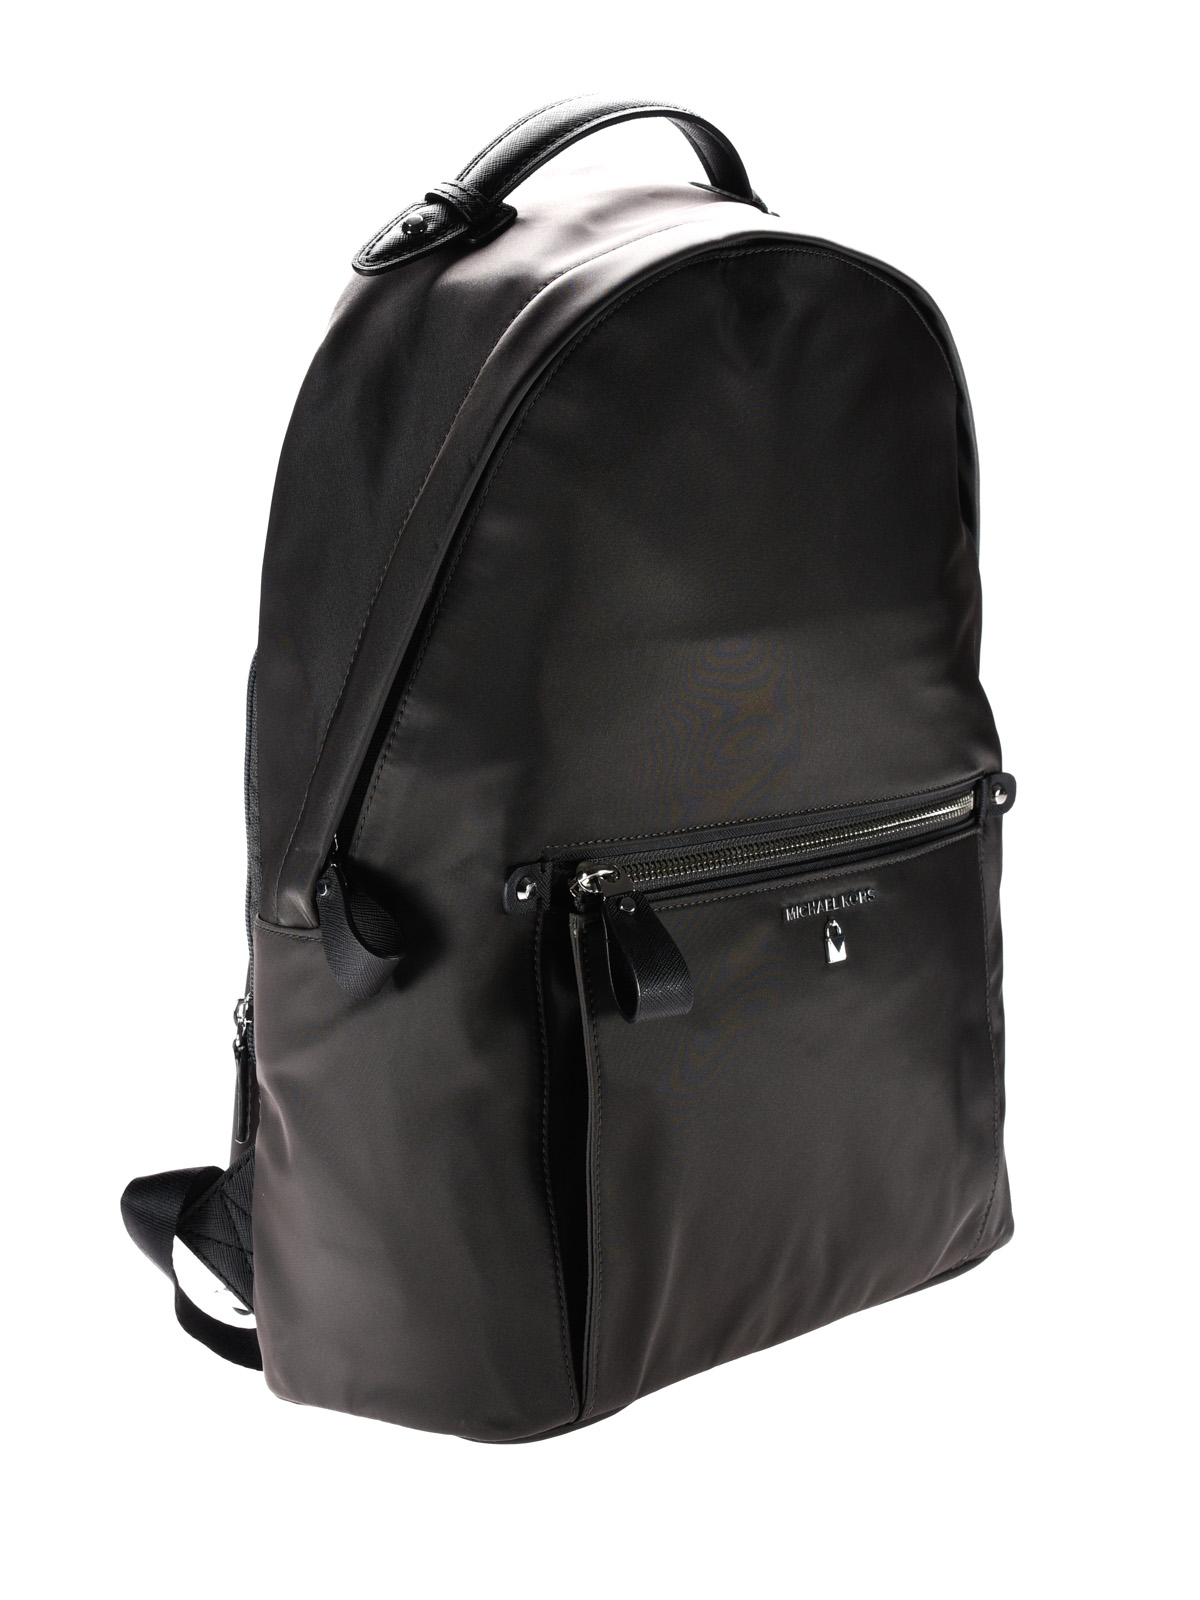 gray michael kors backpack